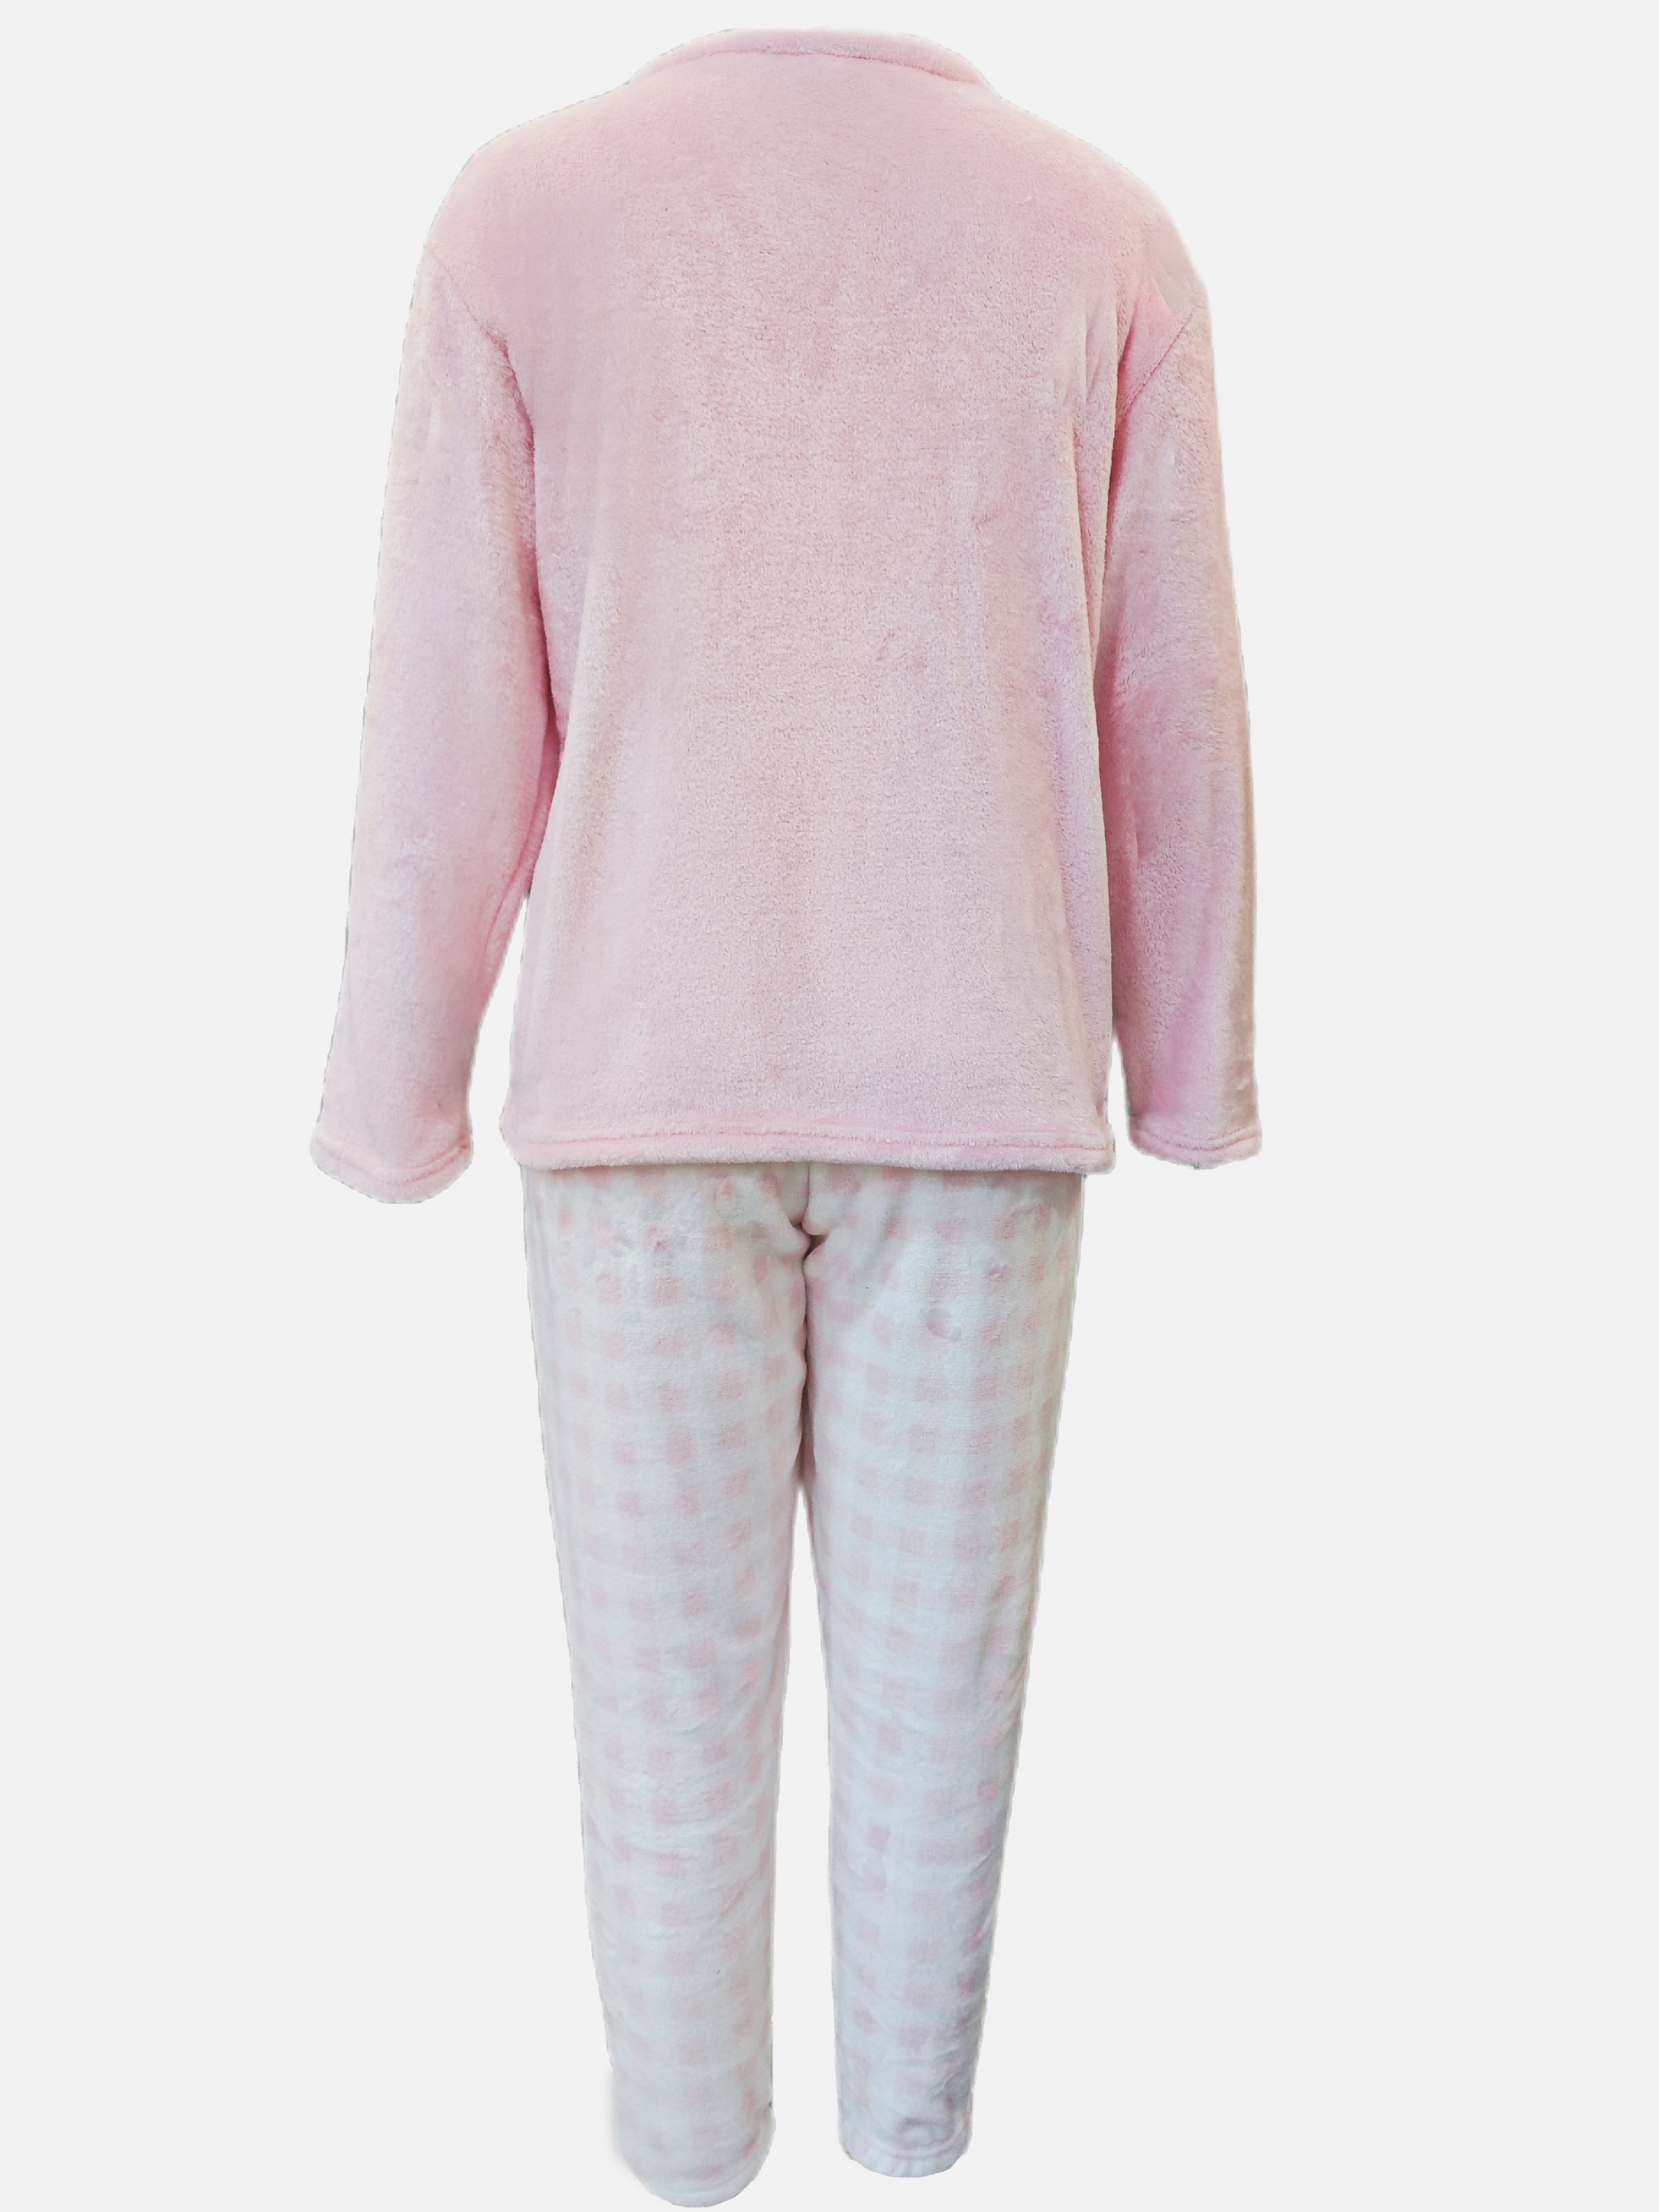 Totally Pink Women's Warm and Cozy Plush Fleece Pajama Bottoms